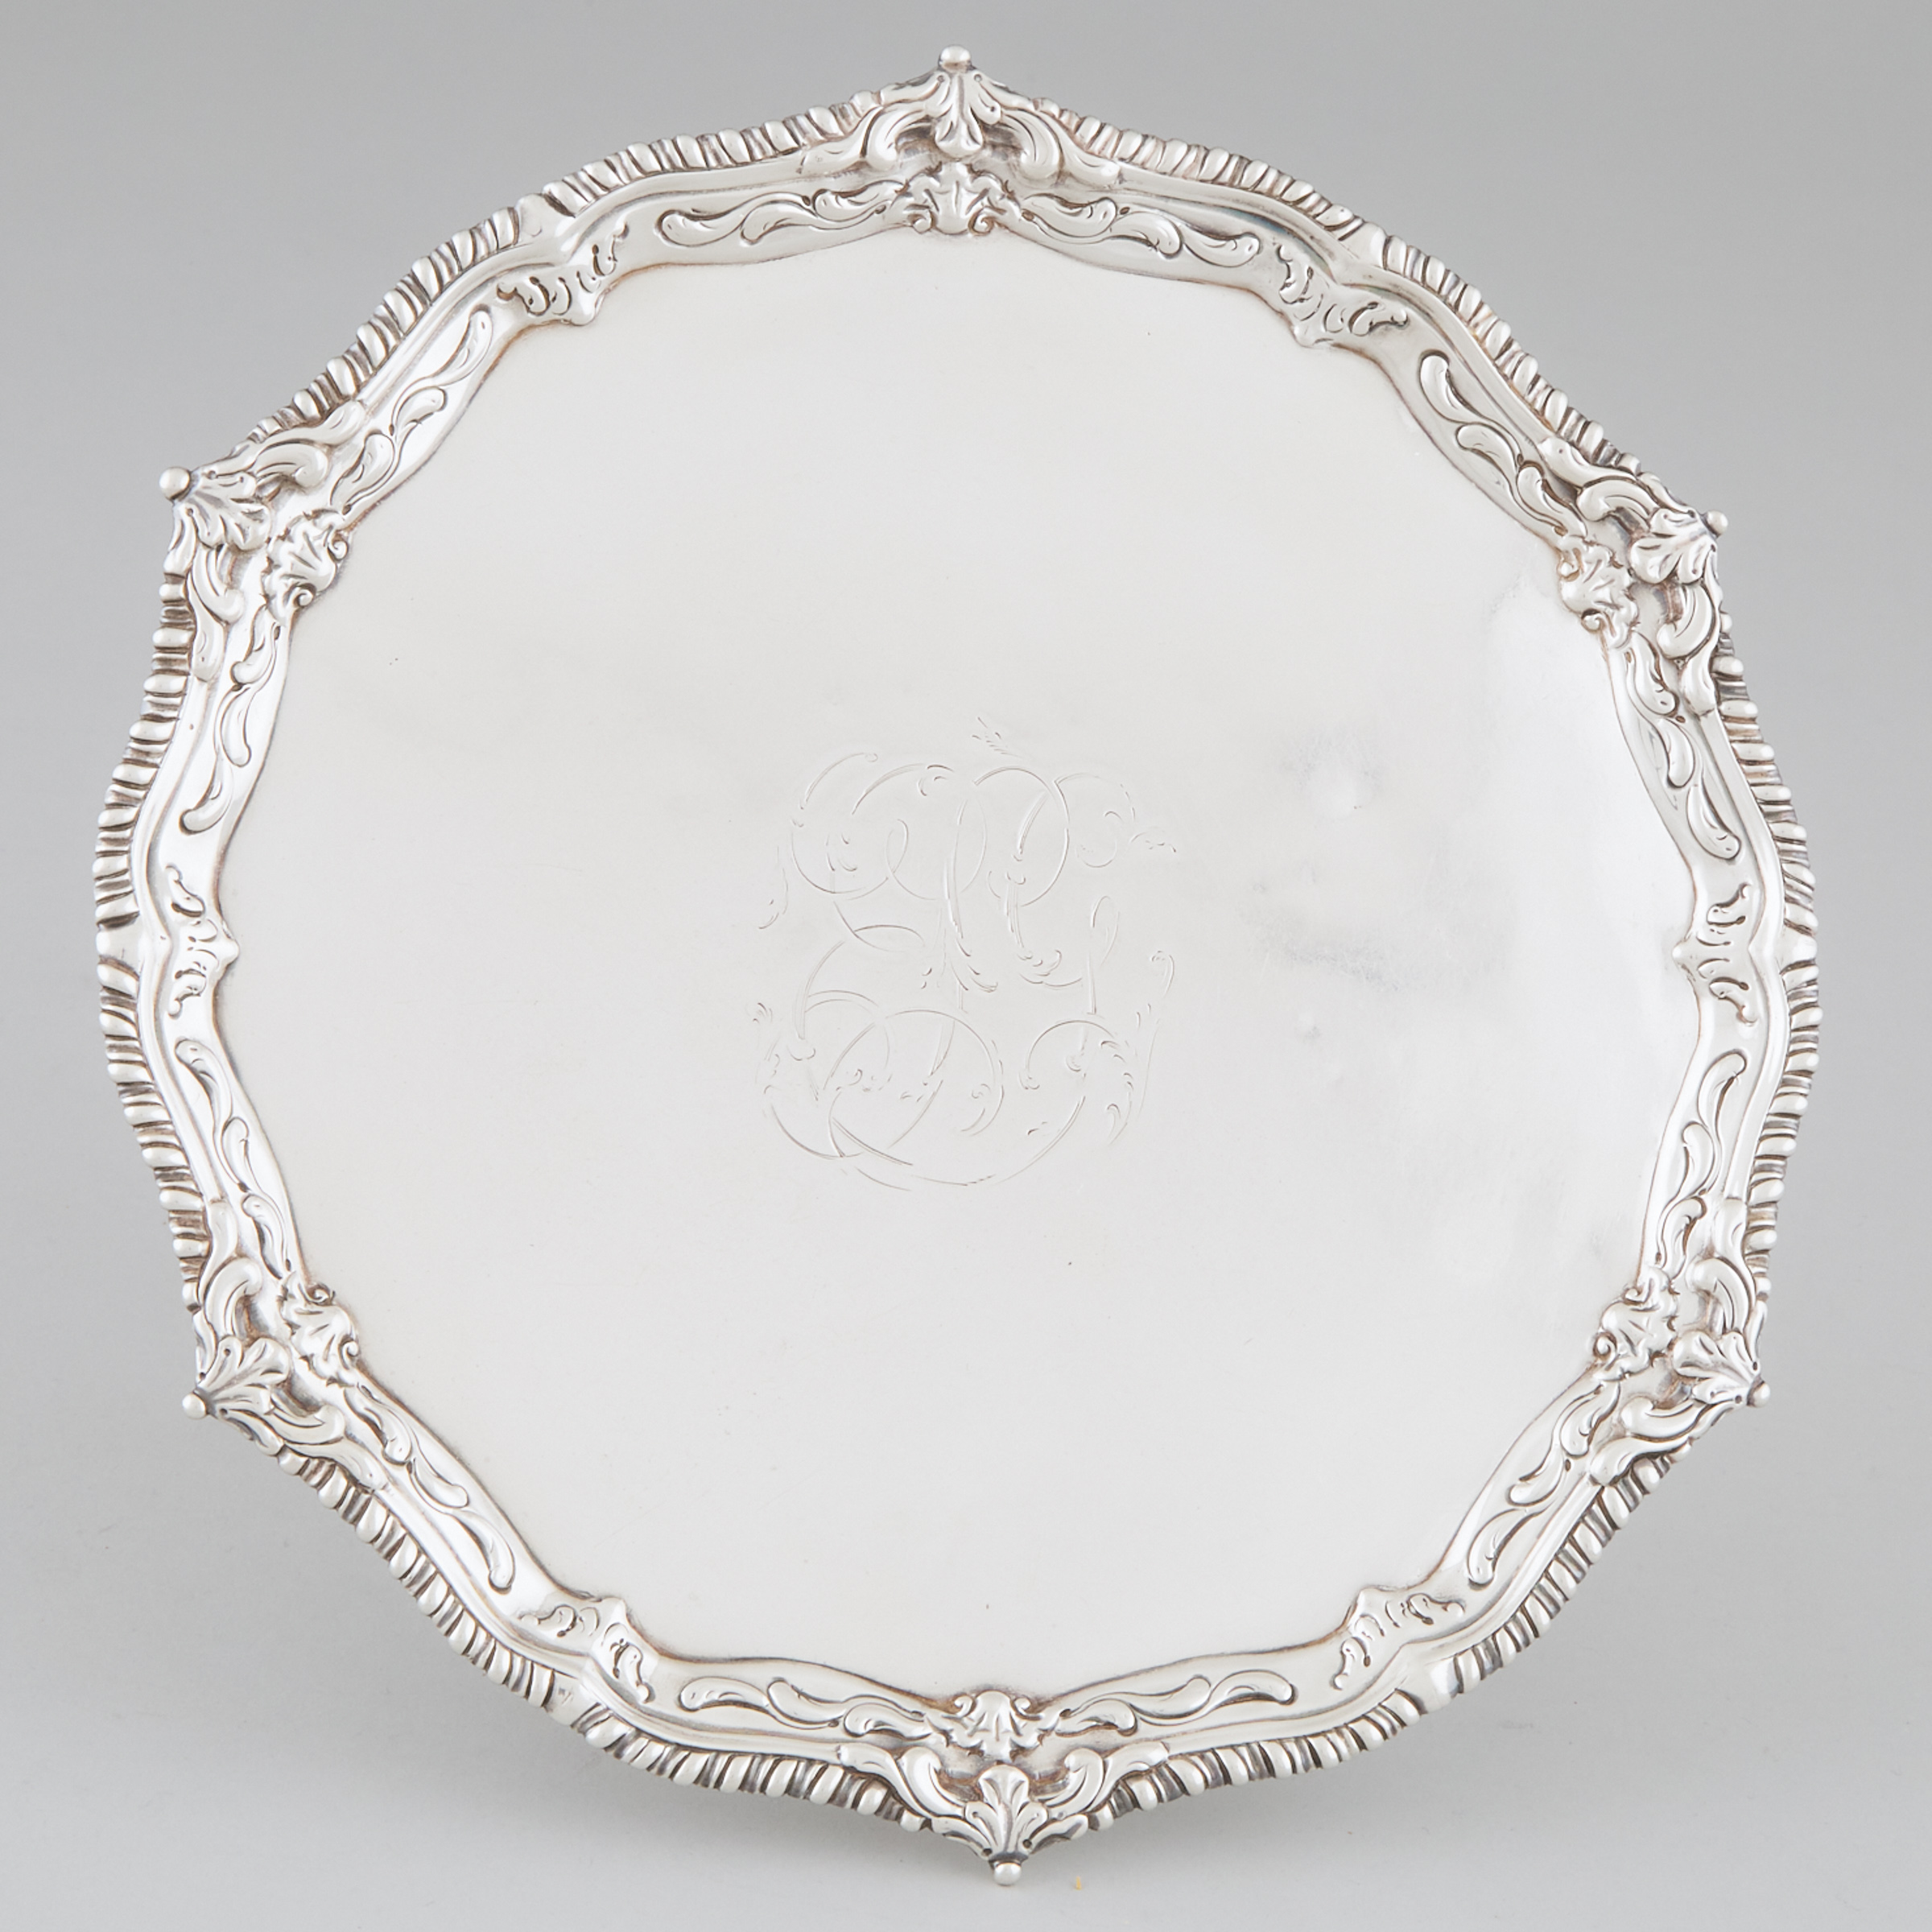 George III Silver Shaped Circular Salver, Ebenezer Coker, London, 1771